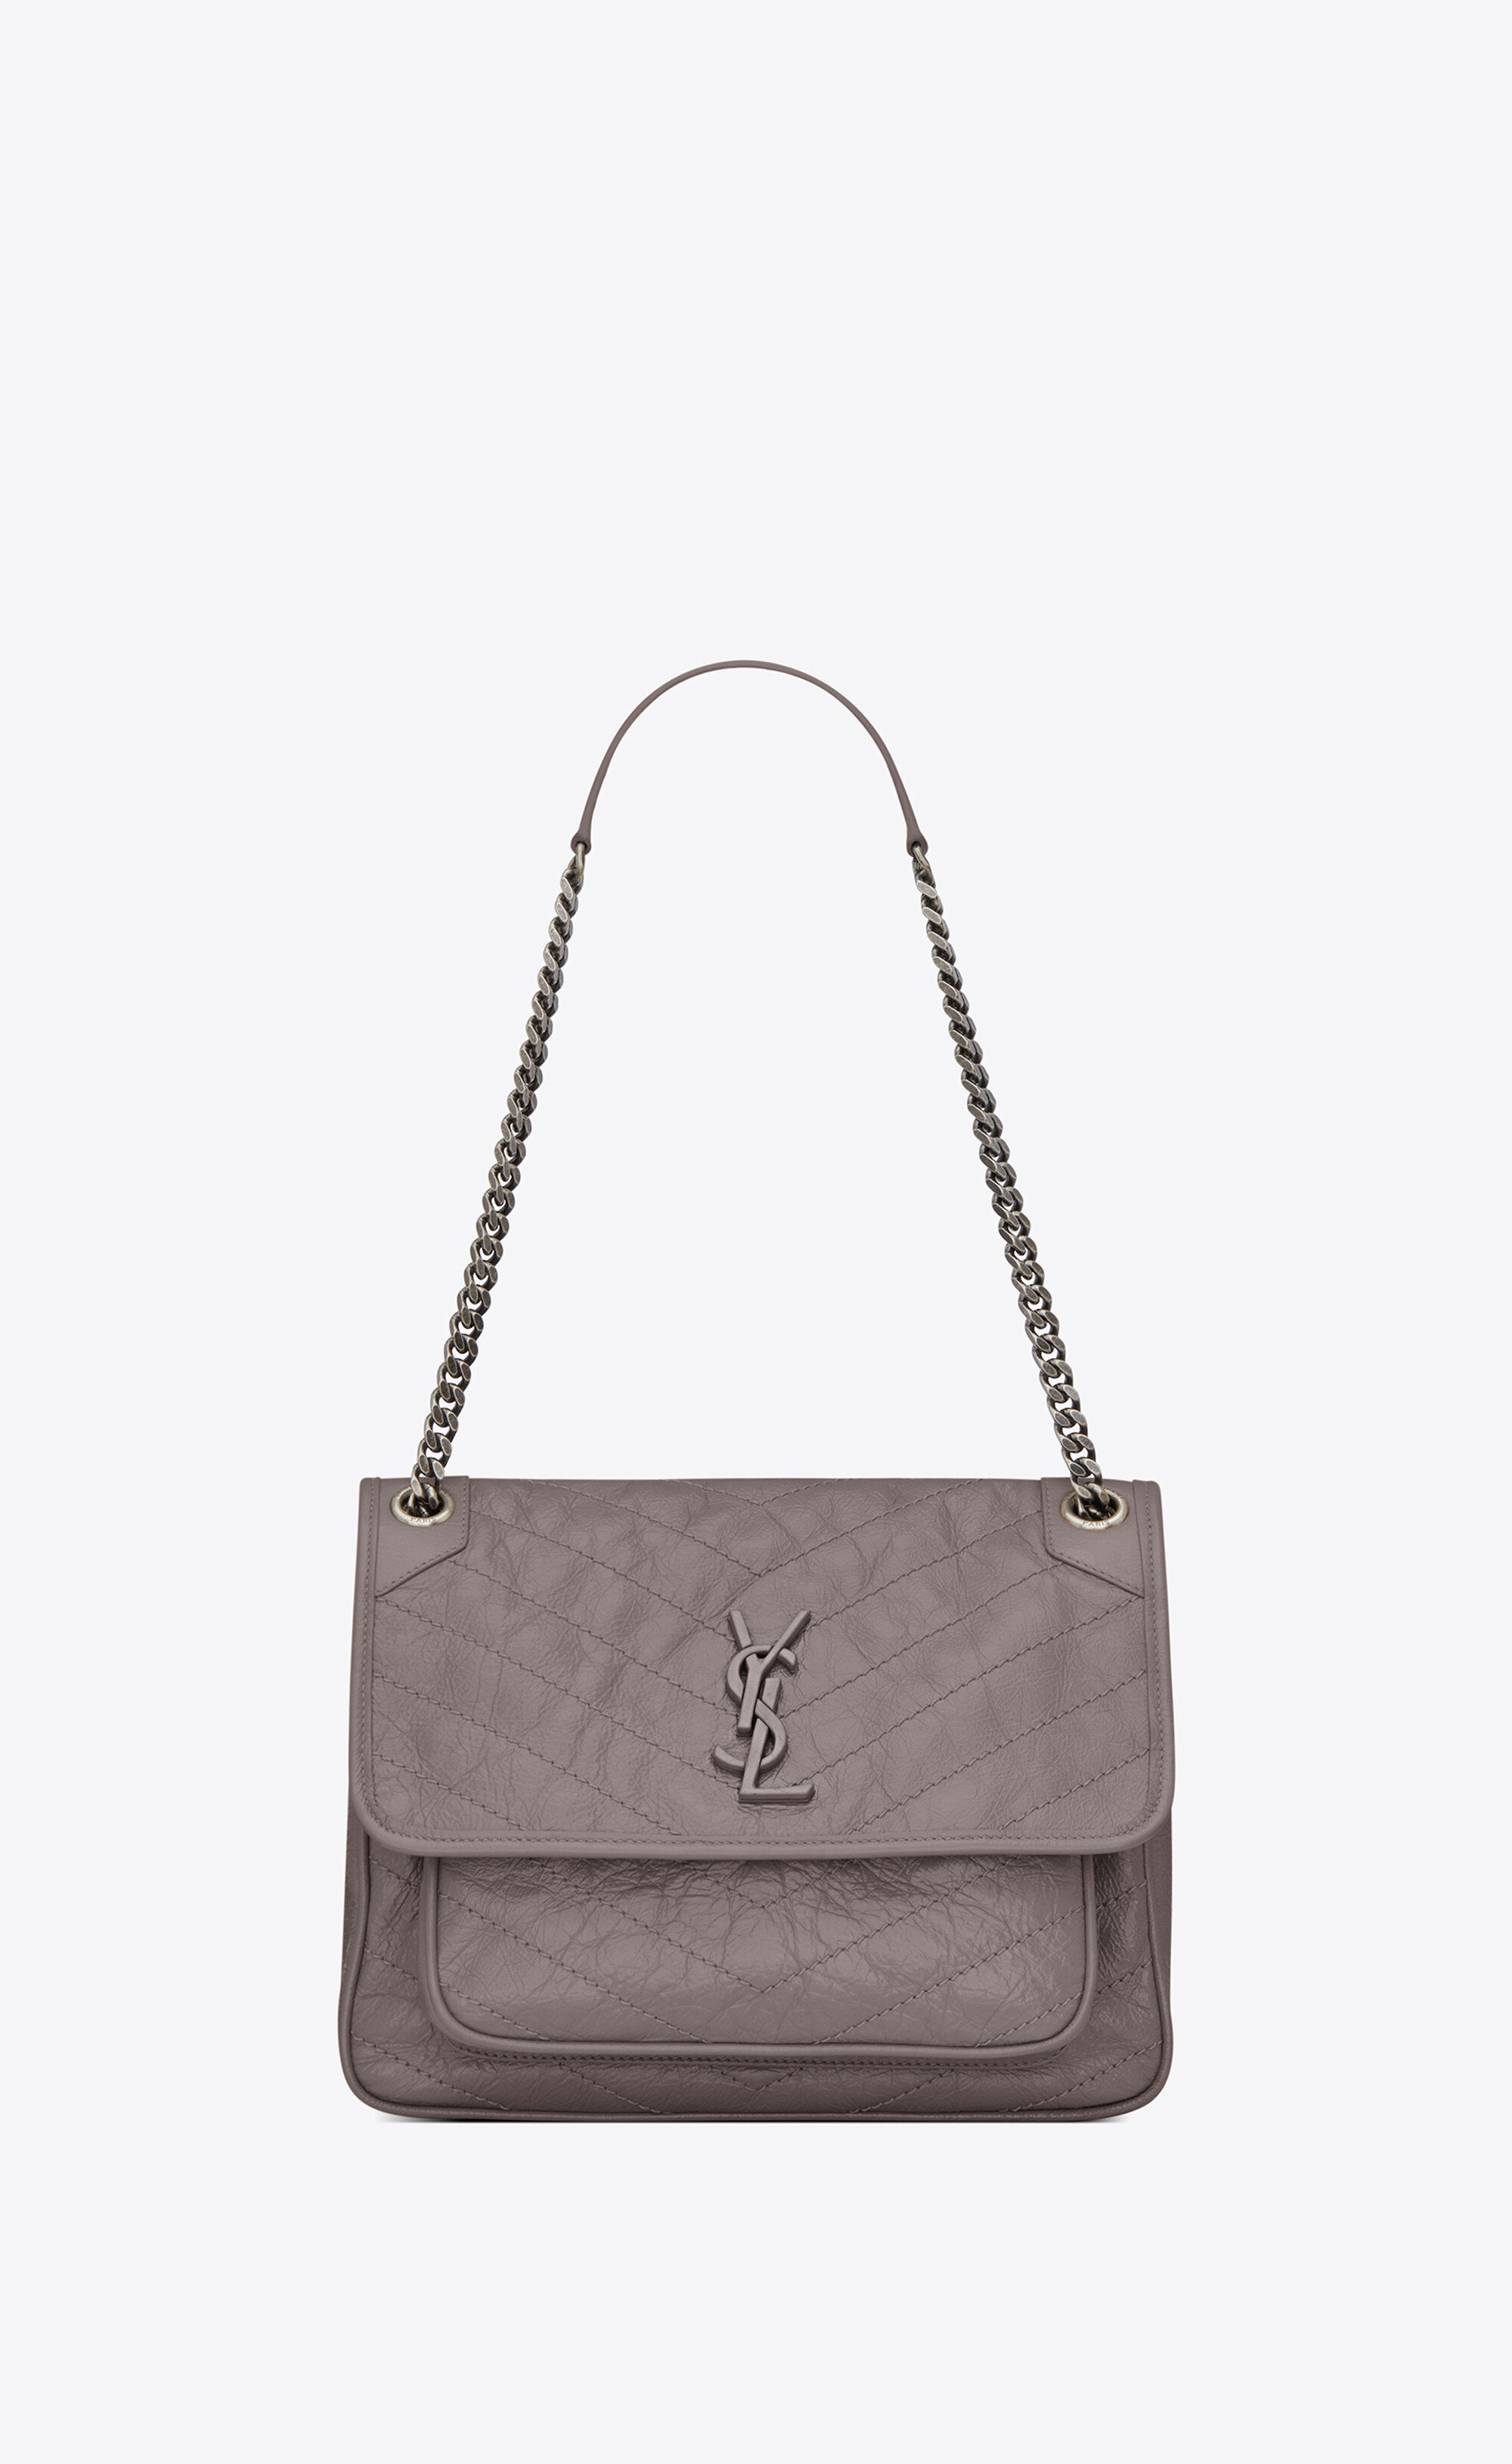 Saint Laurent Niki Medium Quilted Crossbody Bag